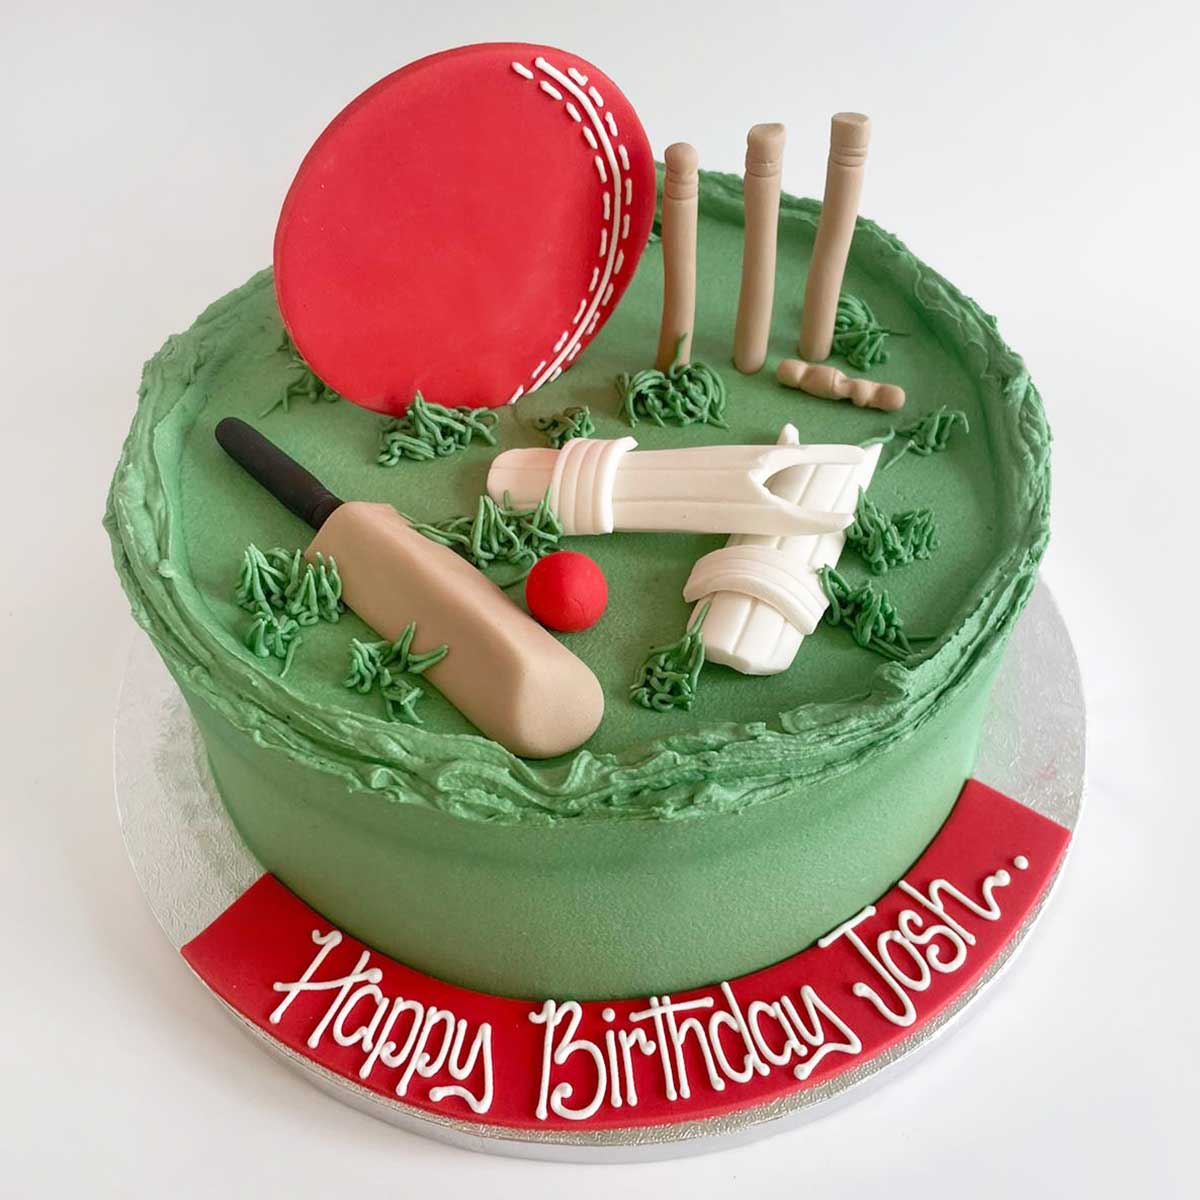 Cricket Themed Celebration Cake - NEW!